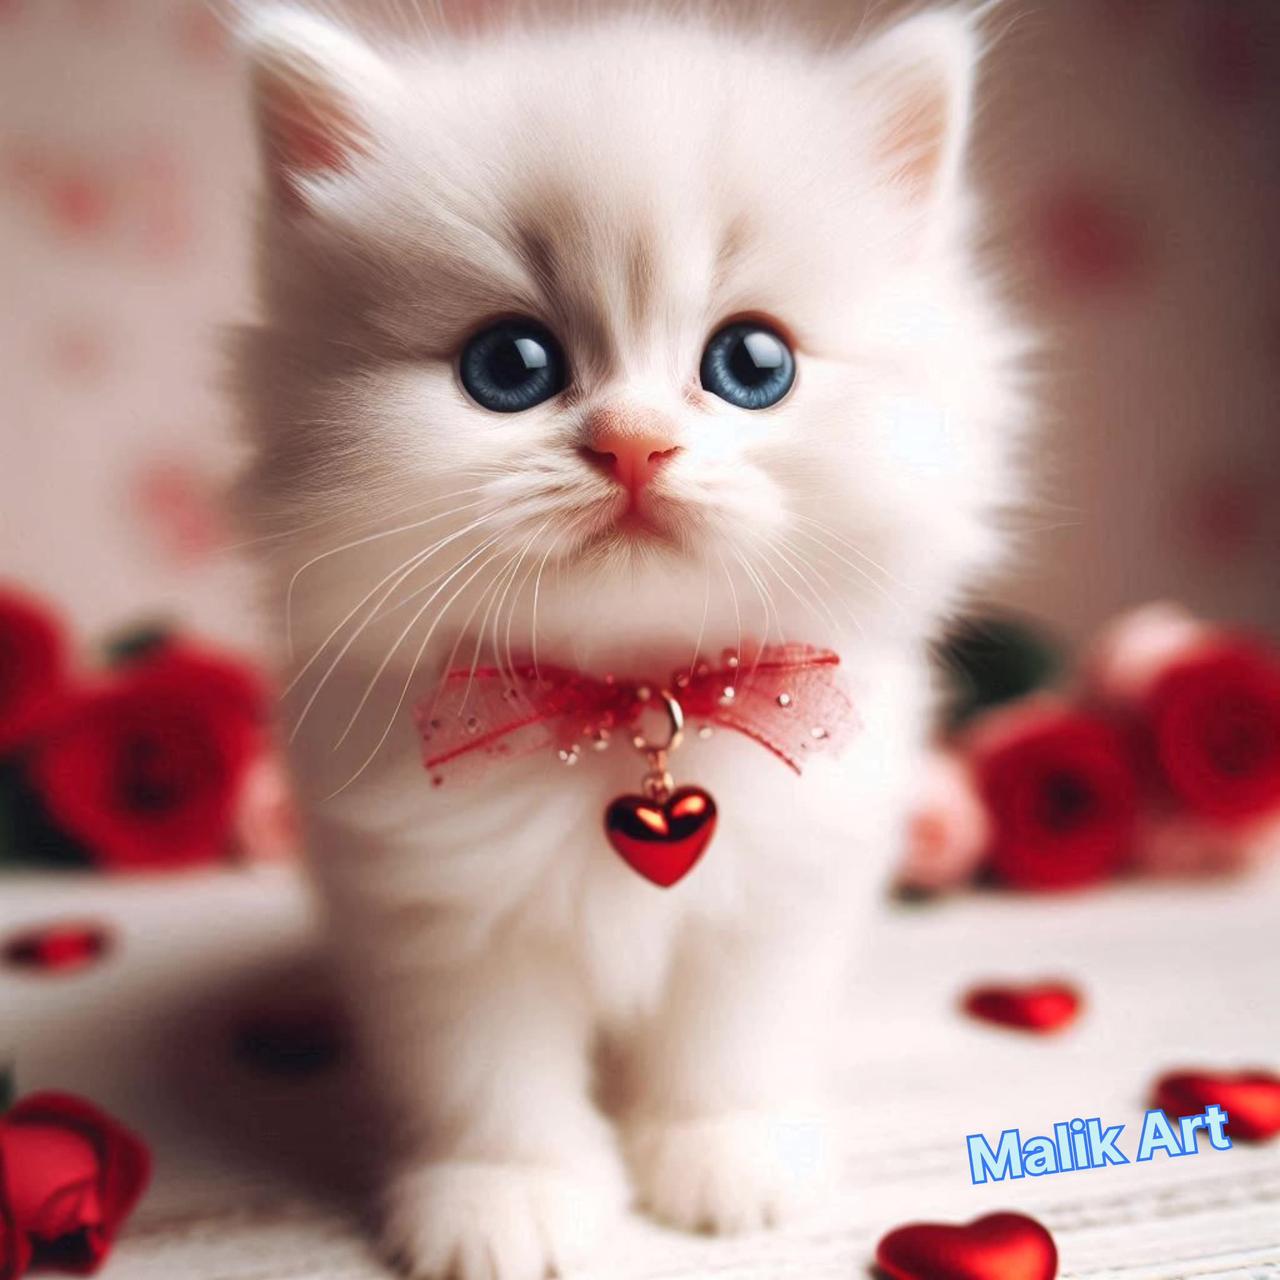 Cute Cats wearing jewellery, pets, animals